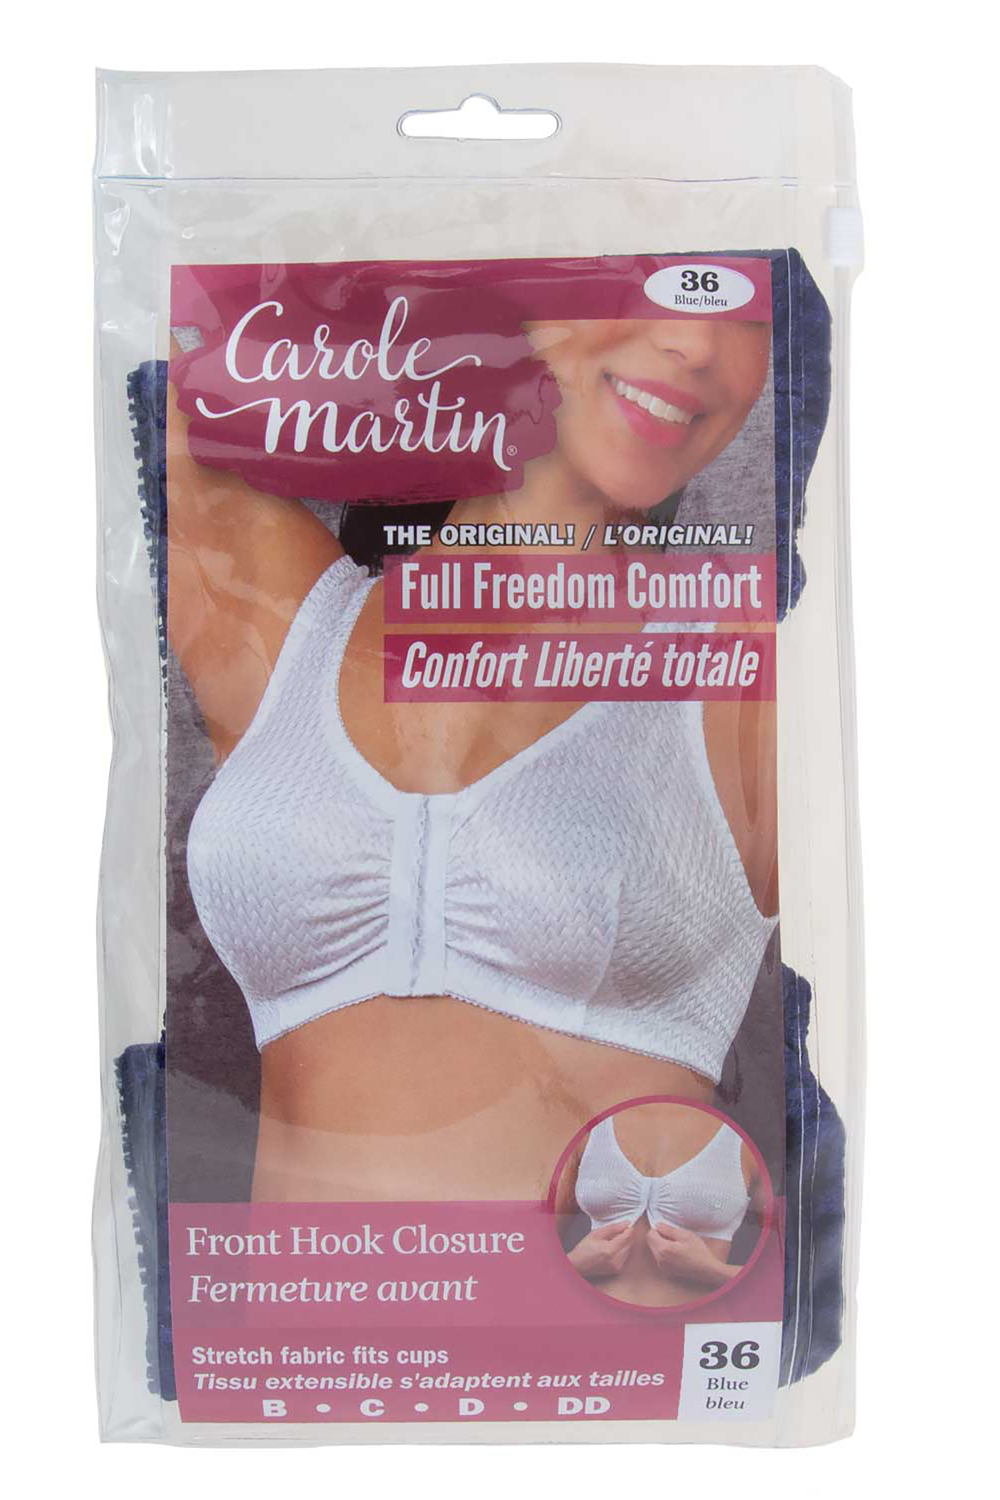 Carole Martin - The original! Full Freedom Comfort bra, blue, 36